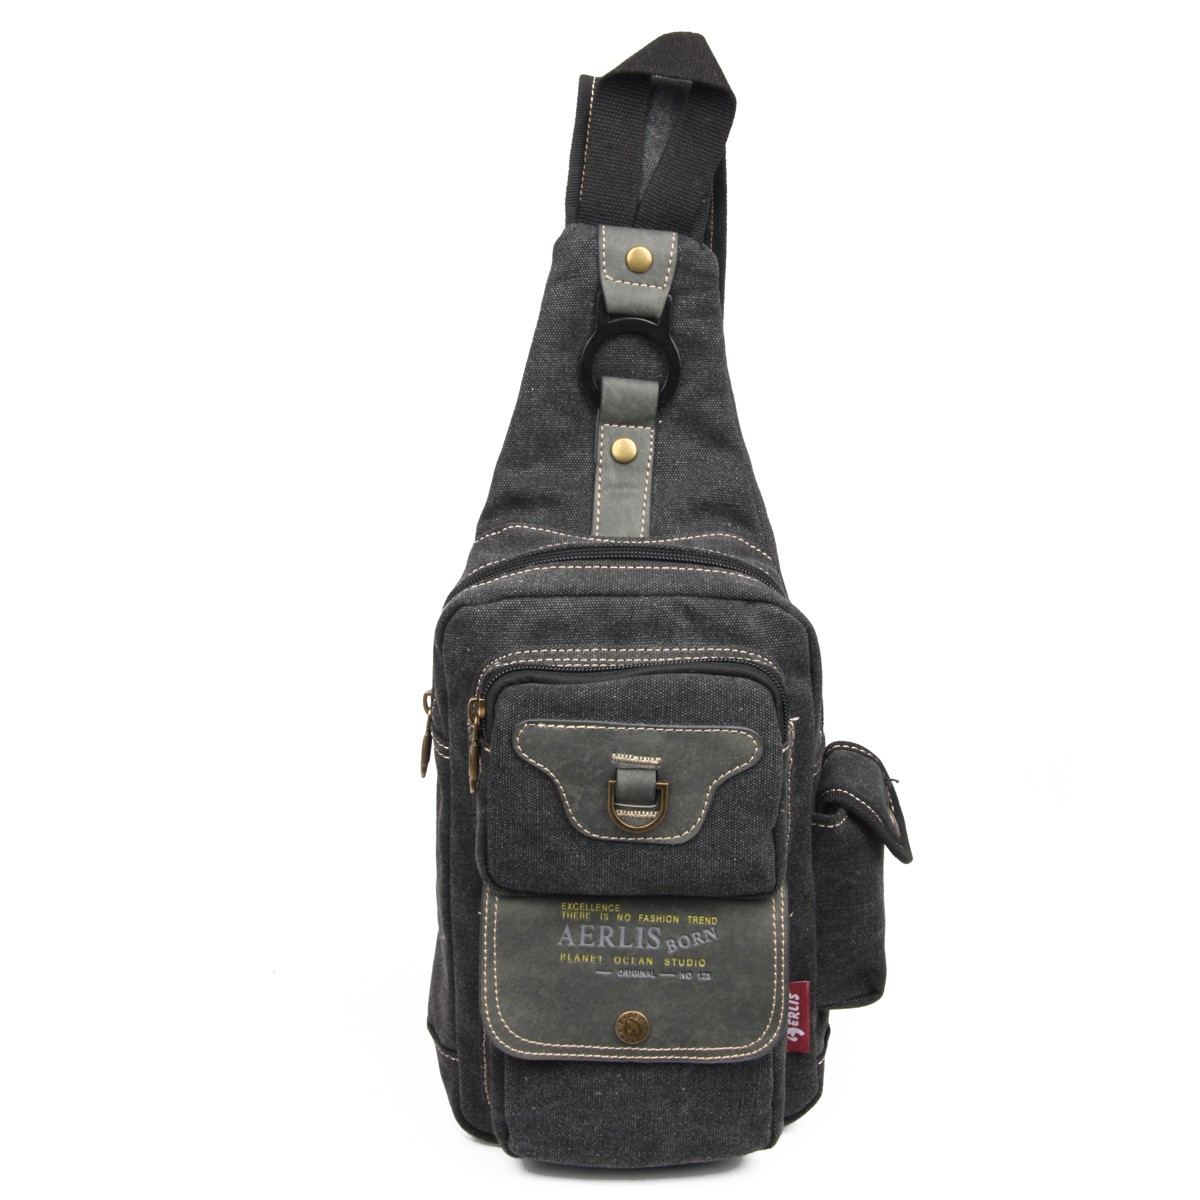 Crossbody sling bag, inexpensive backpack - YEPBAG